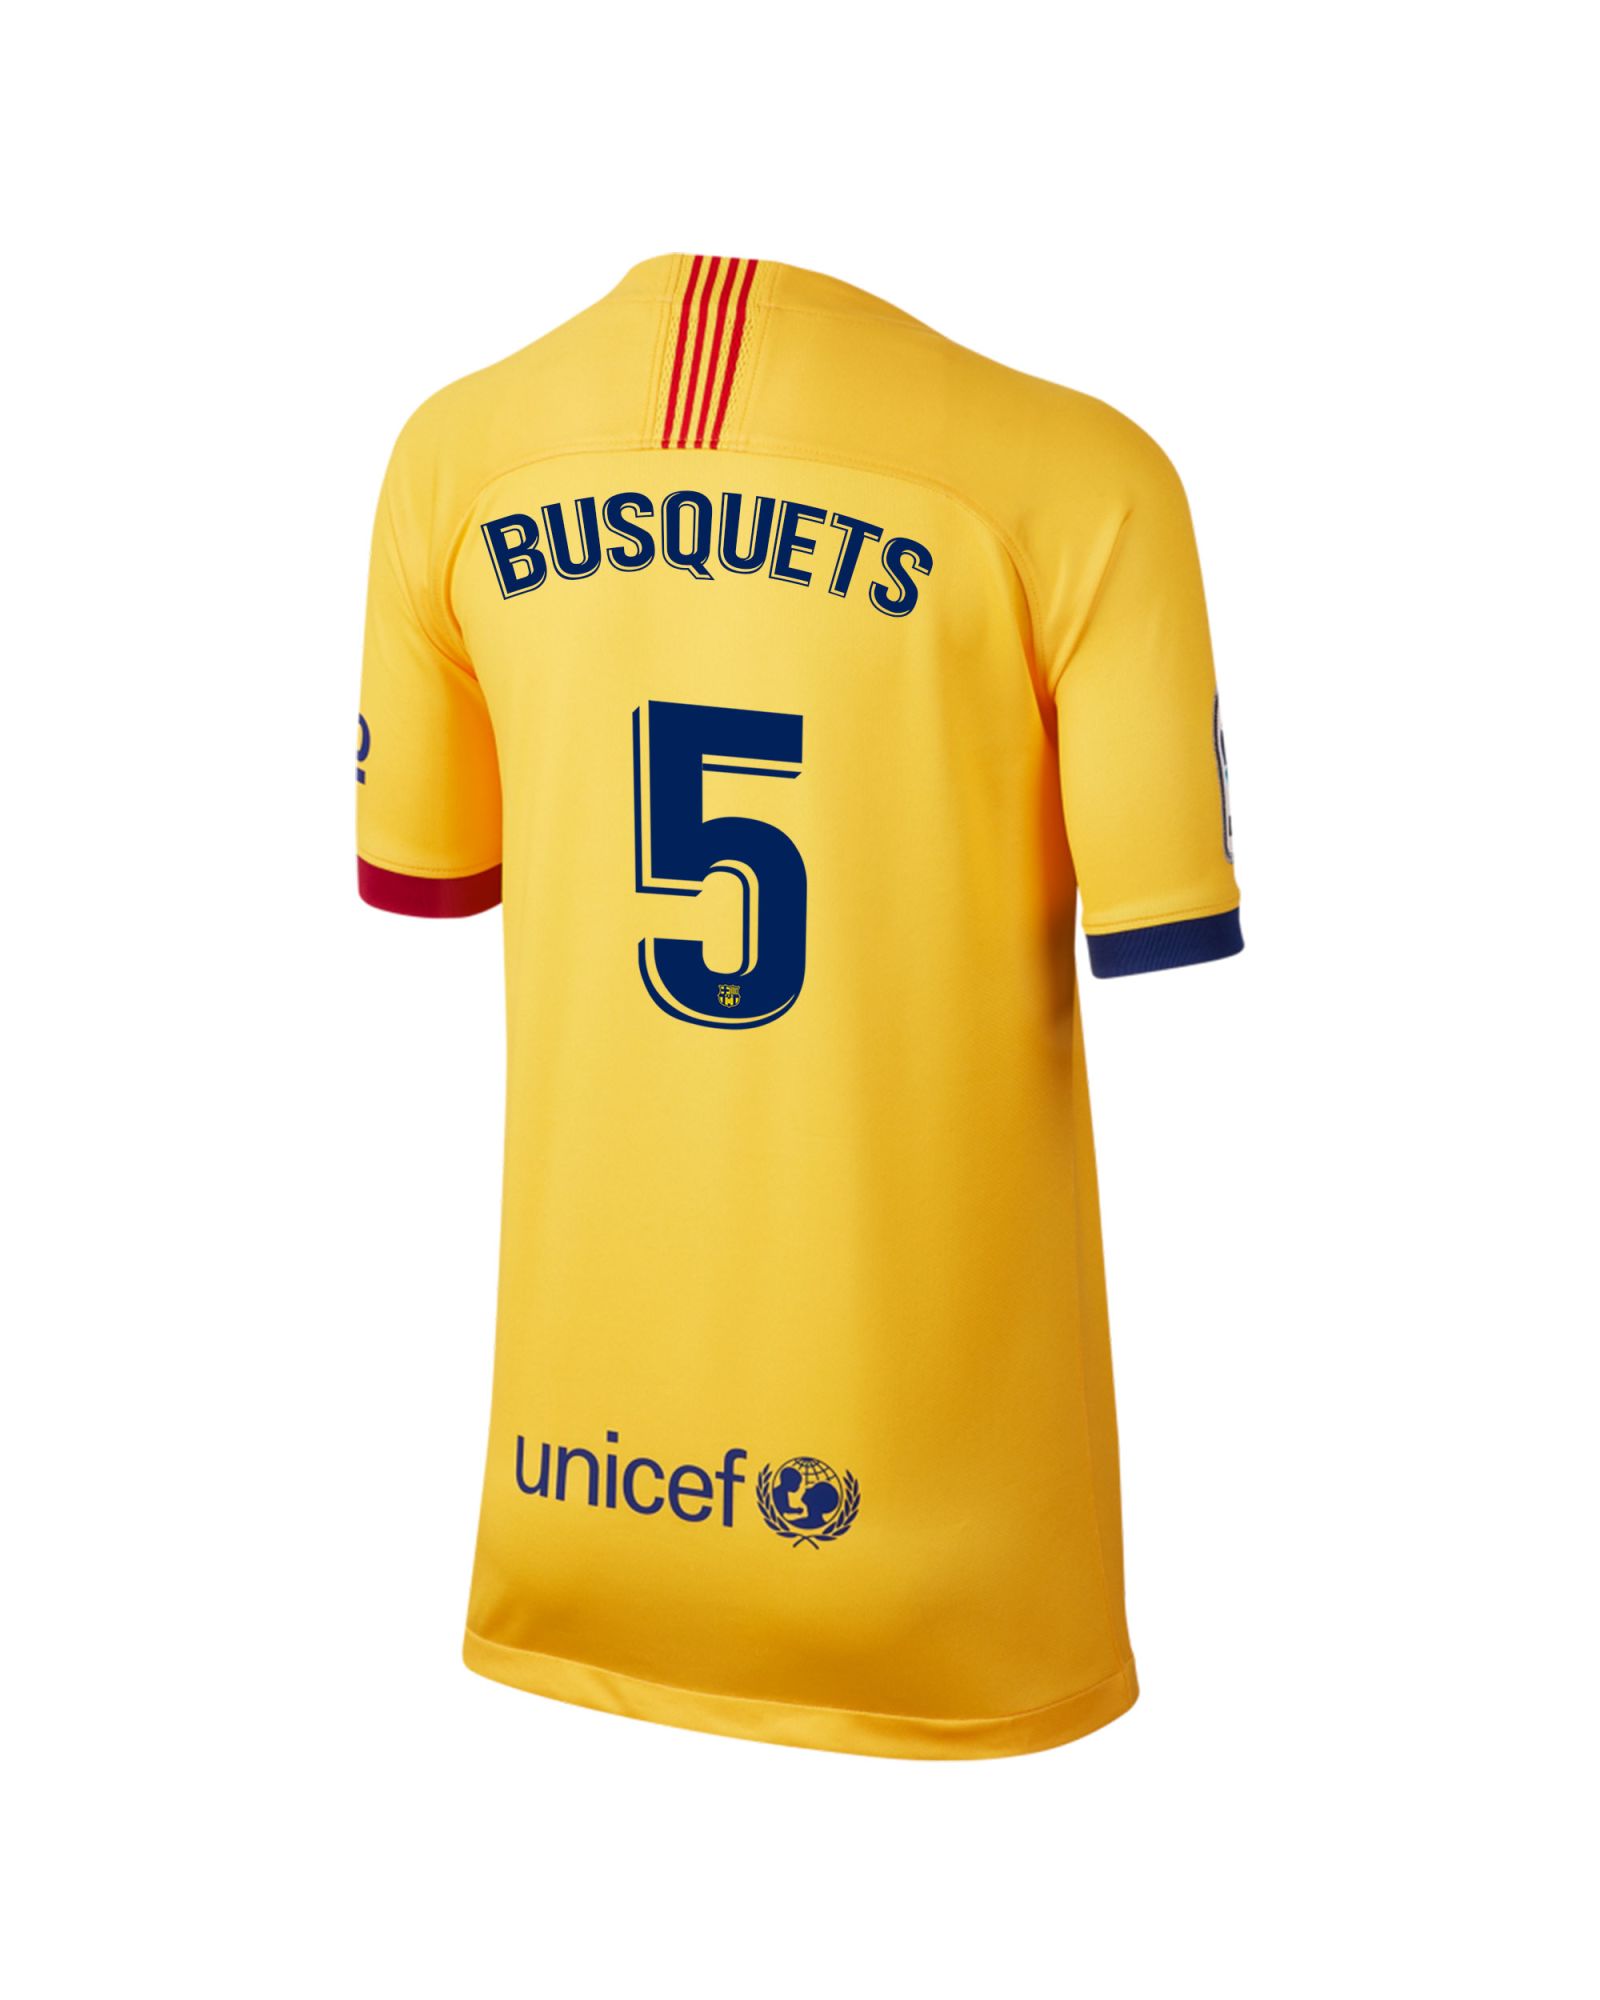 Camiseta 2ª FC Barcelona 2019/2020 Junior Busquets - Fútbol Factory